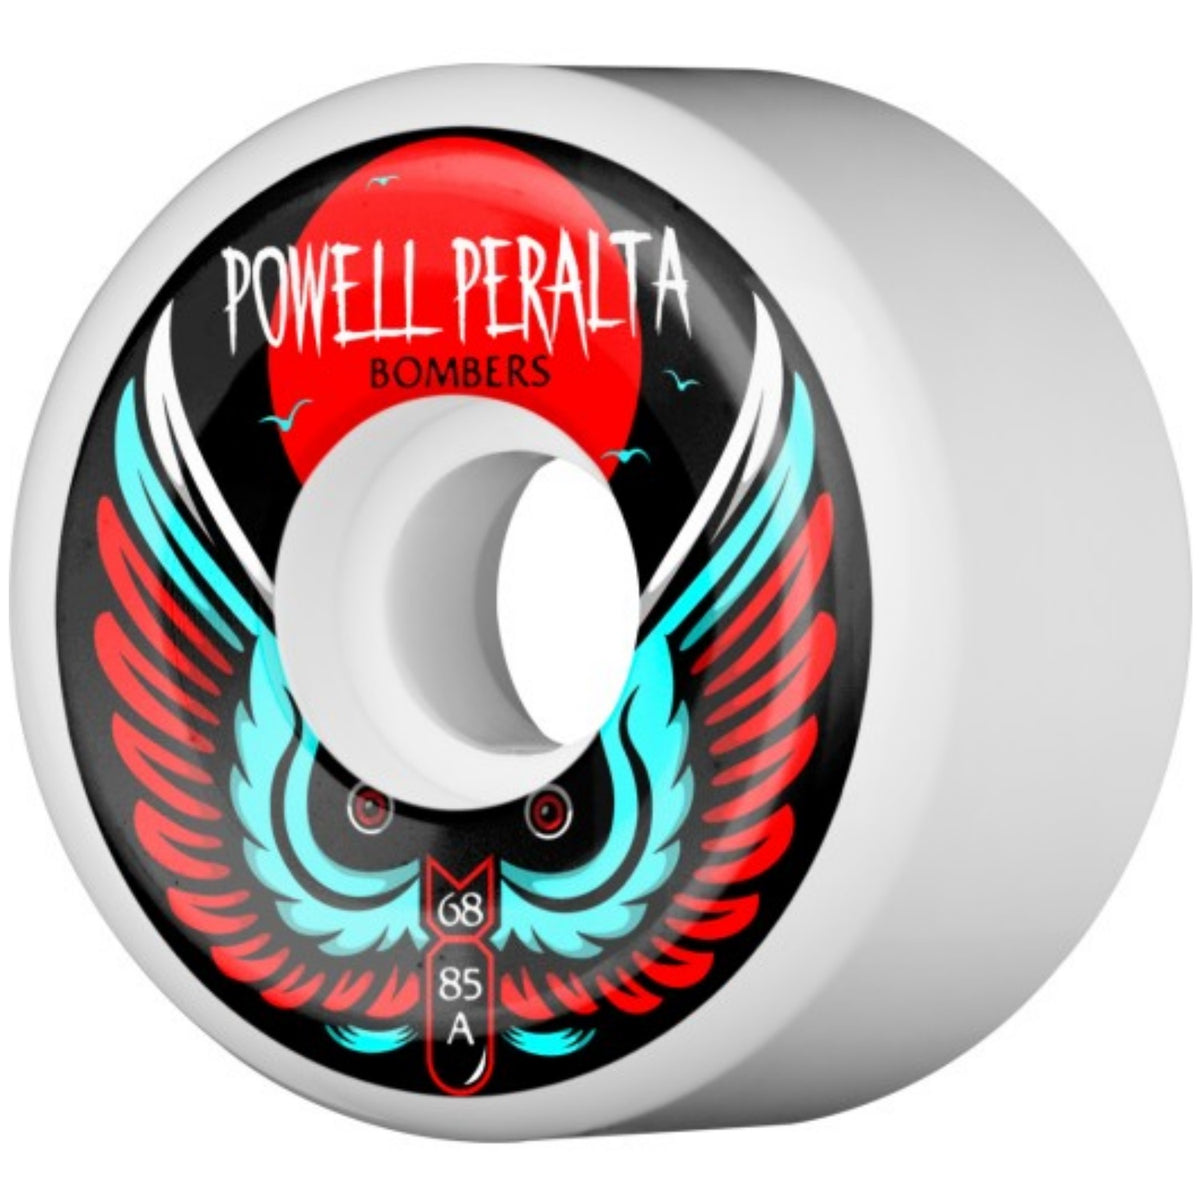 Powell-Peralta Bomber III Skateboard Wheels, 60mm 85a